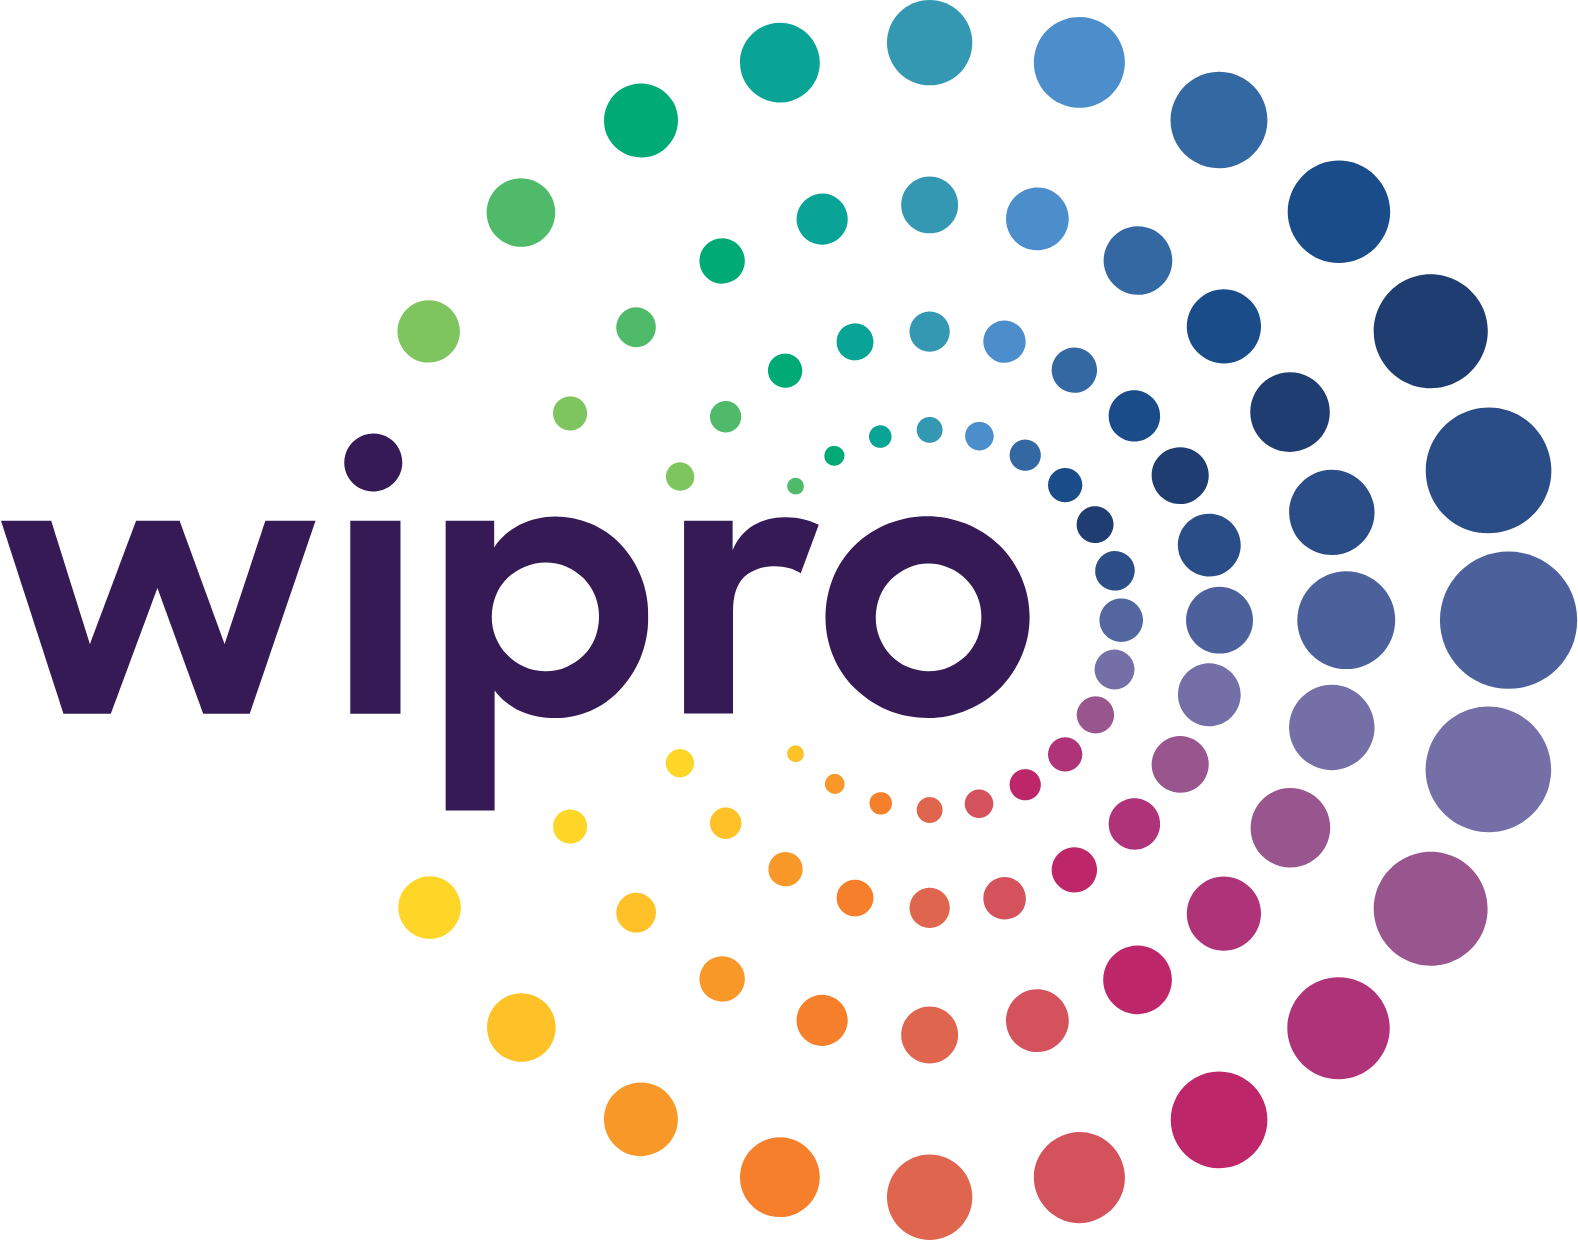 Wipro logo large (transparent PNG)